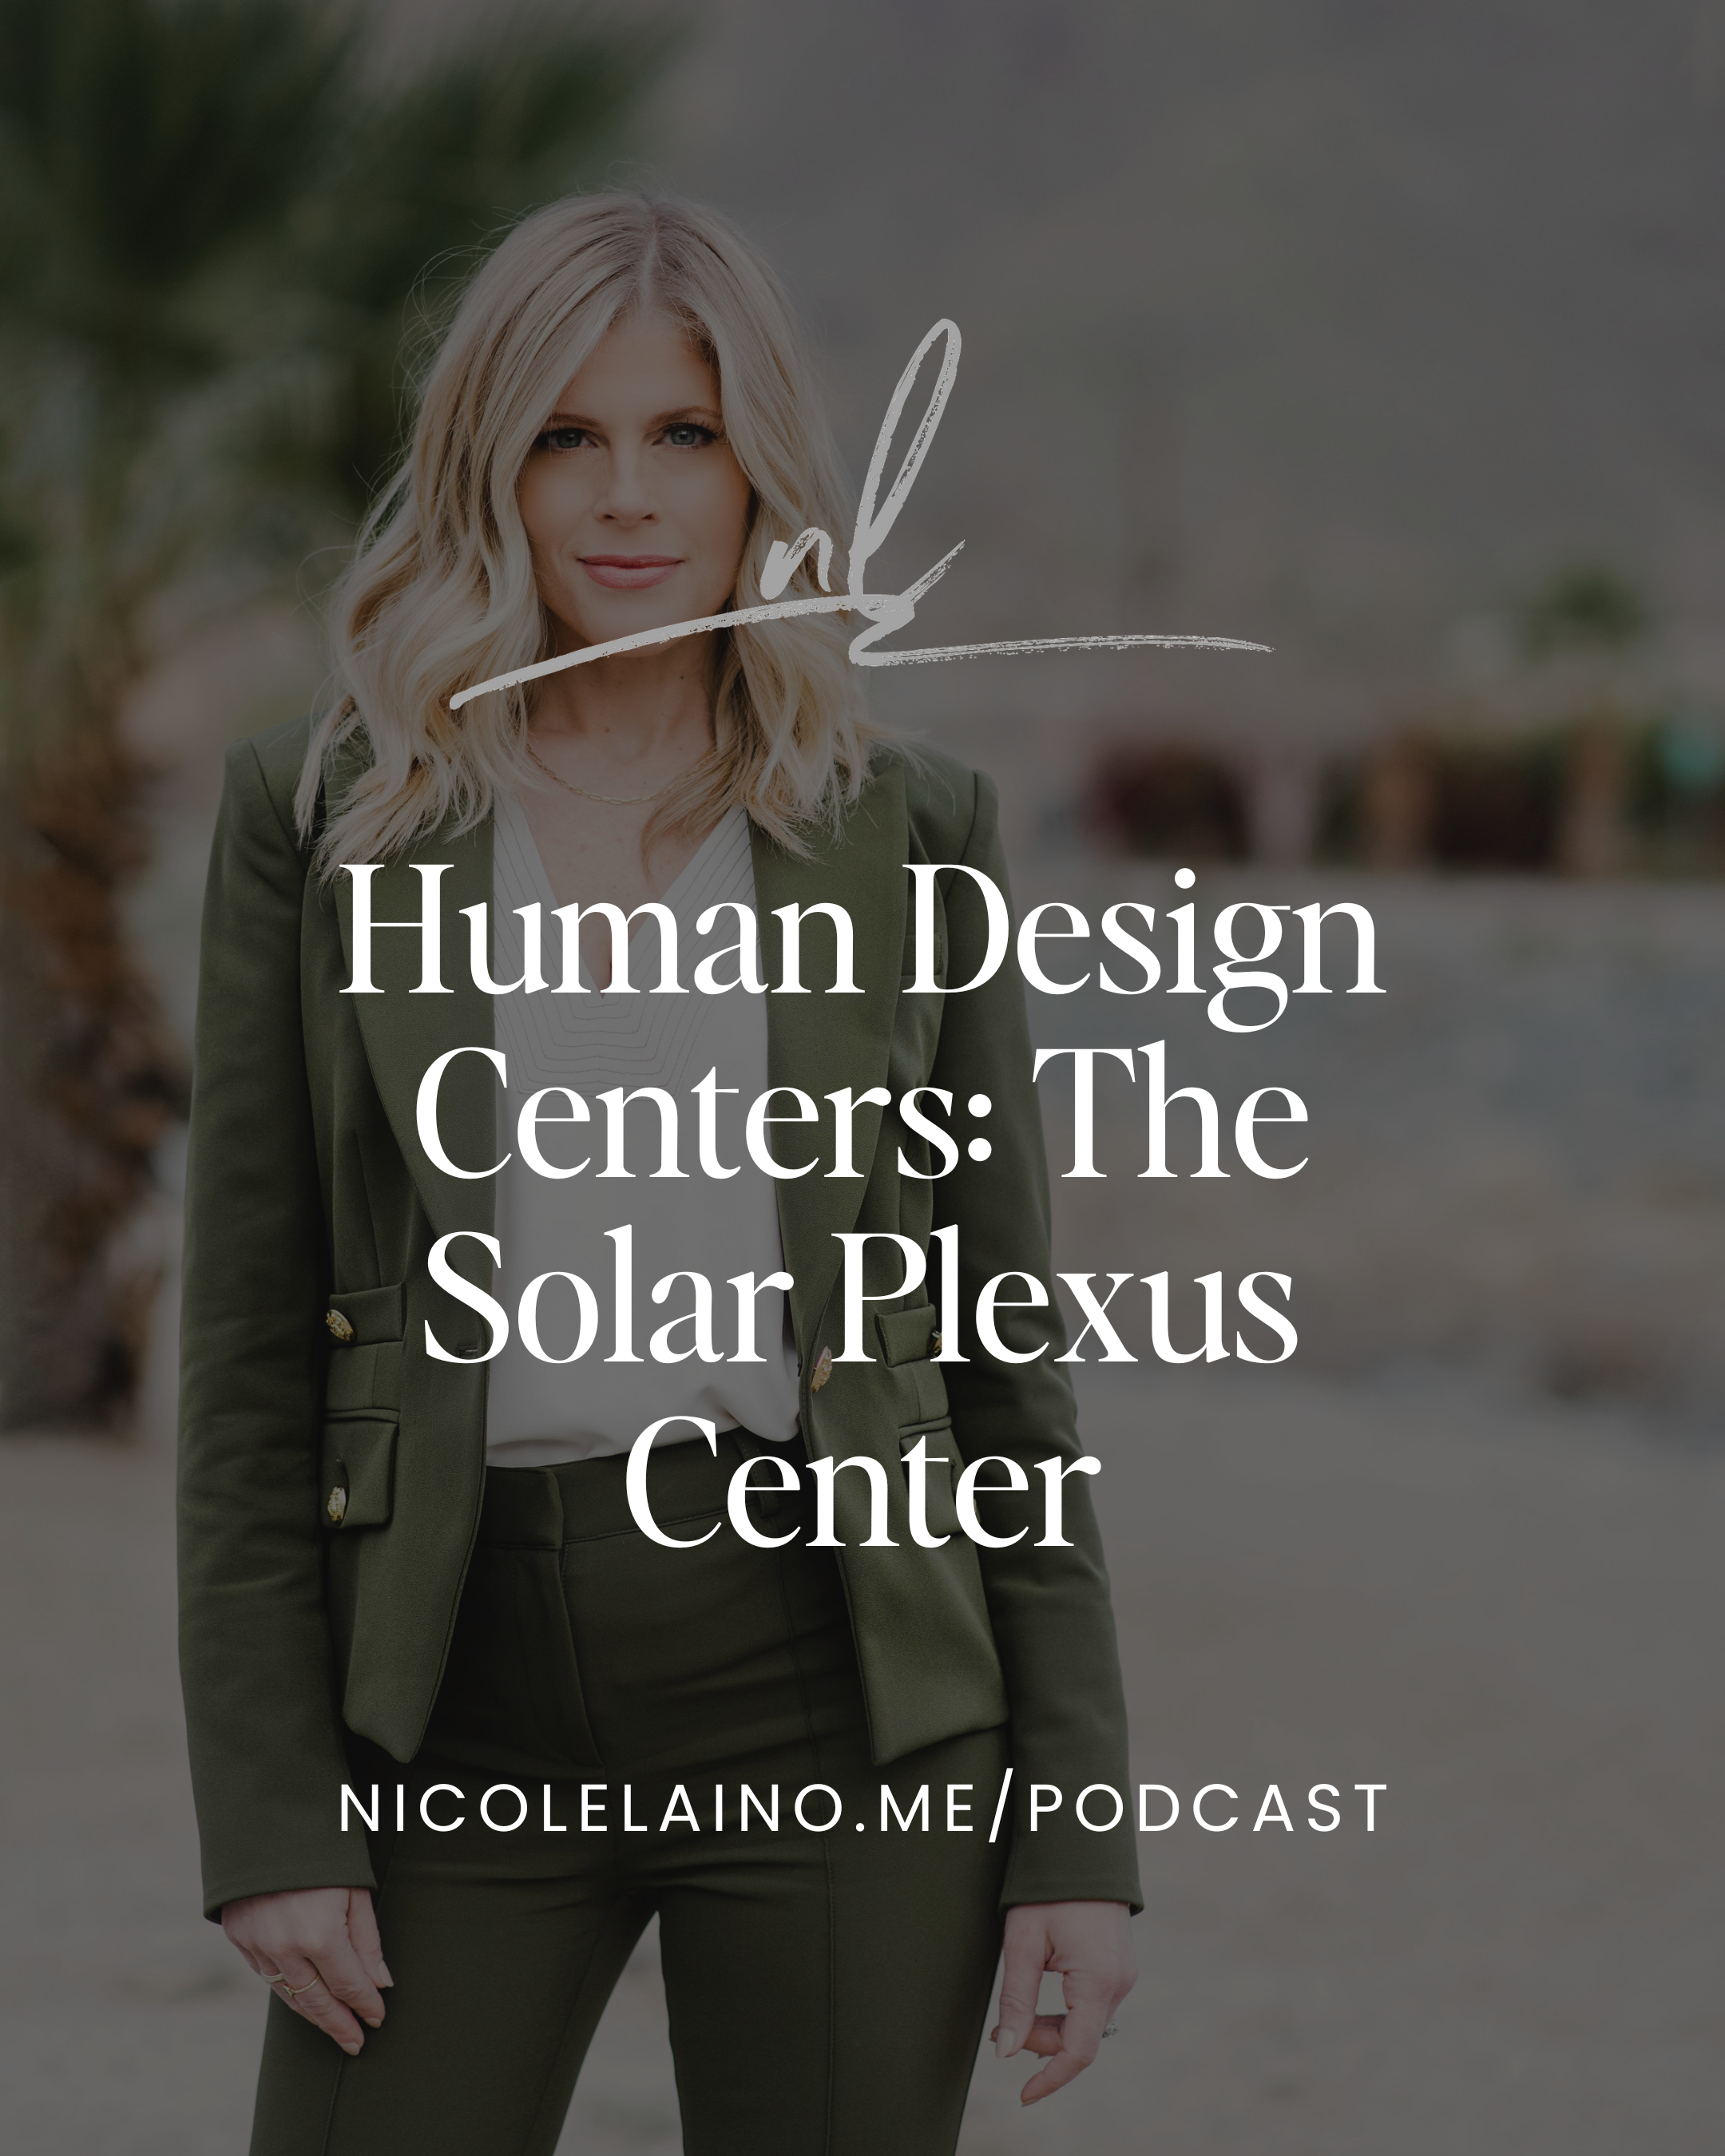 Human Design Centers: The Solar Plexus Center